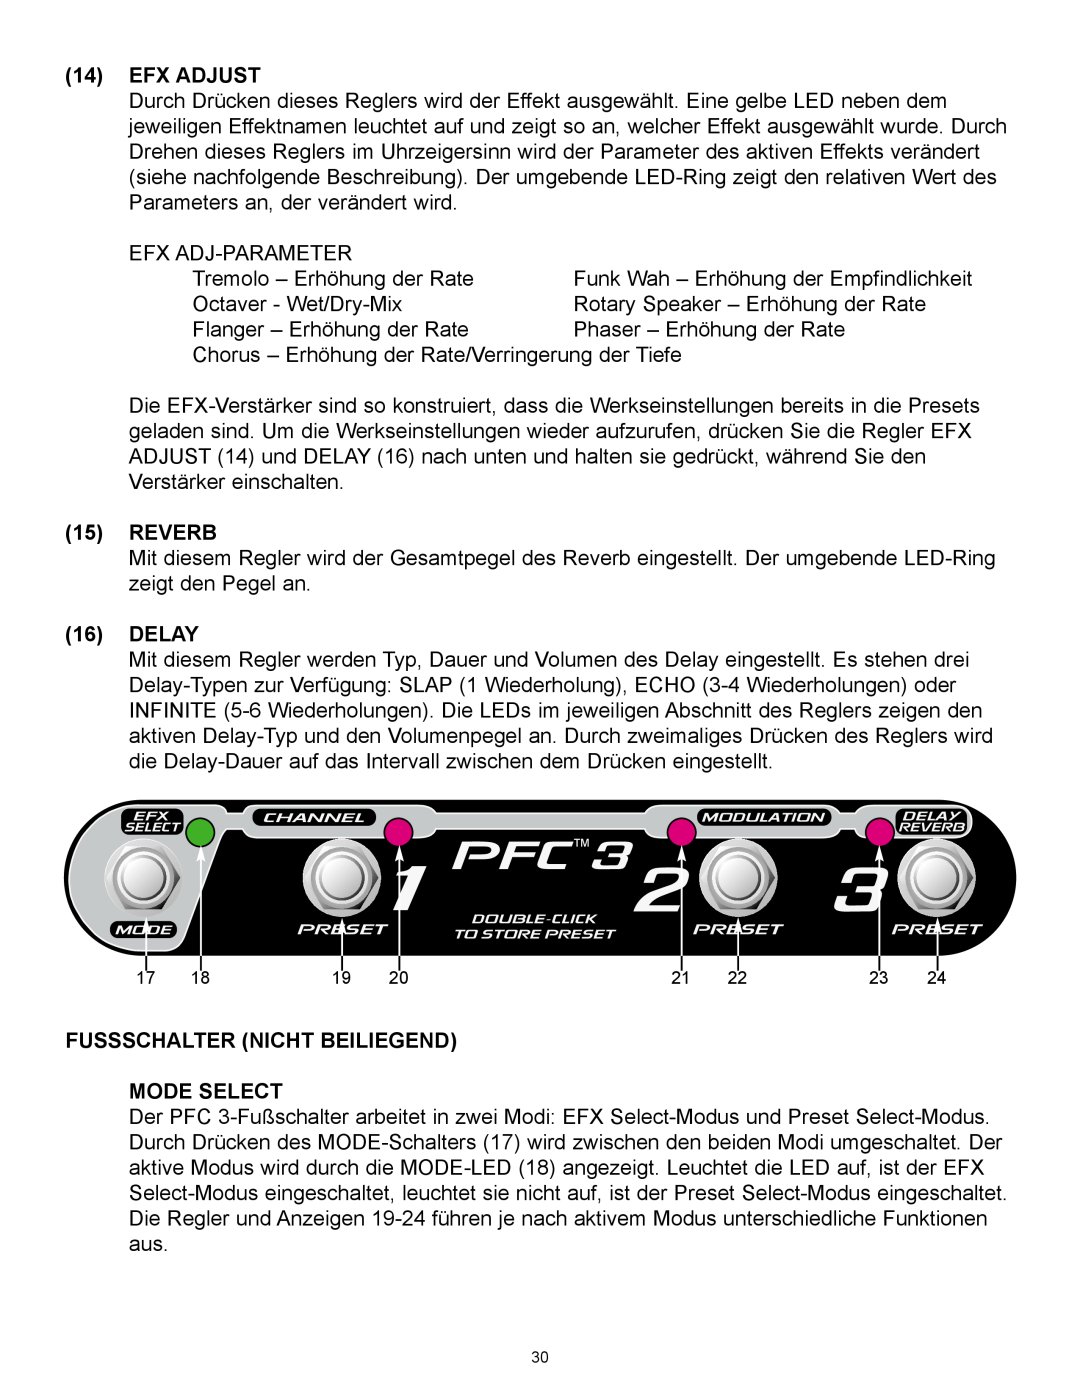 Peavey 258 EFX operation manual Fussschalter Nicht Beiliegend Mode Select, PFCTM3, 14EFX ADJUST, 15REVERB, 16DELAY 